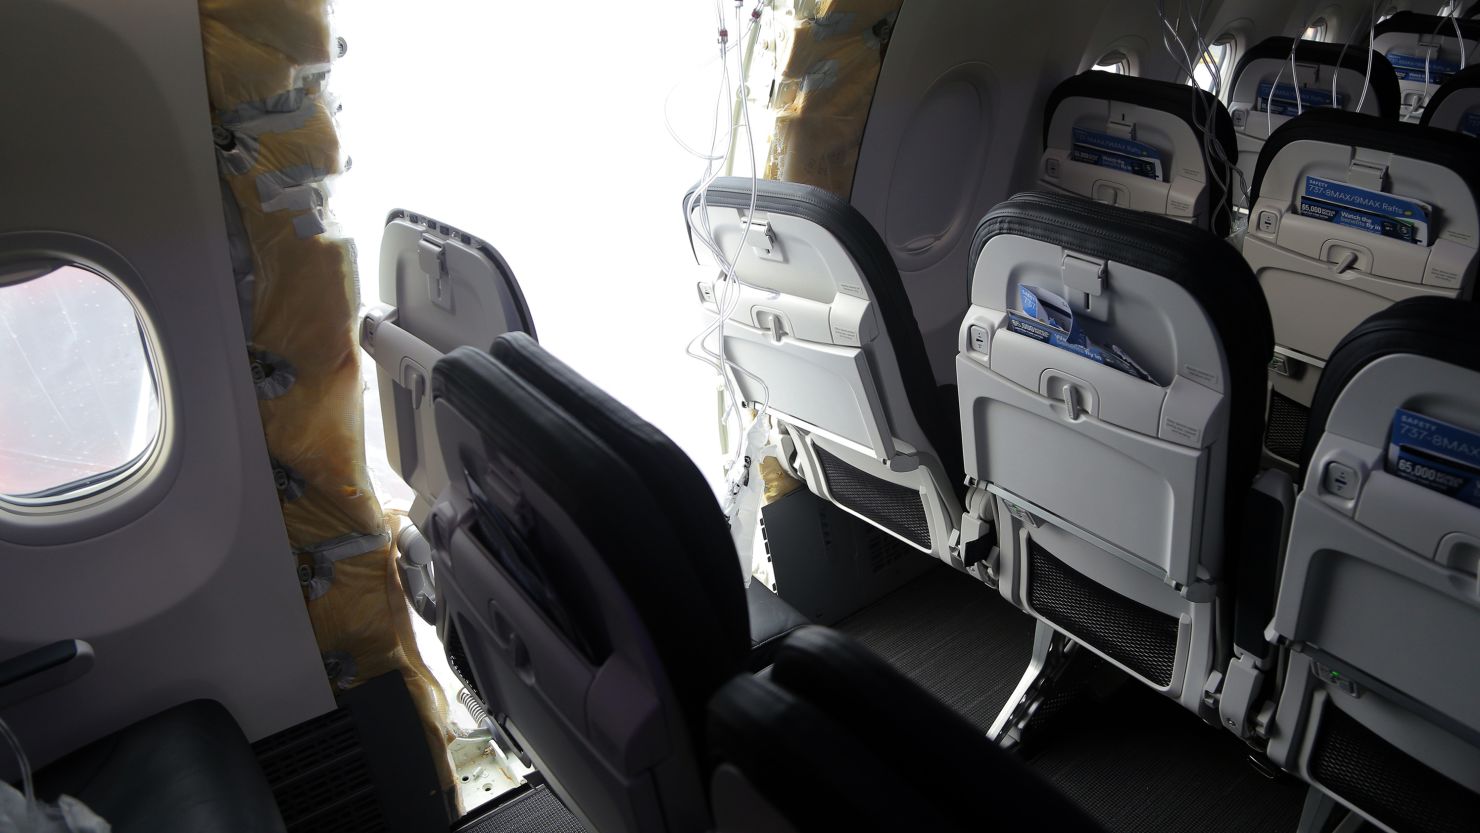 Aviation experts raise questions about 737 Max ‘door plug’ design CNN